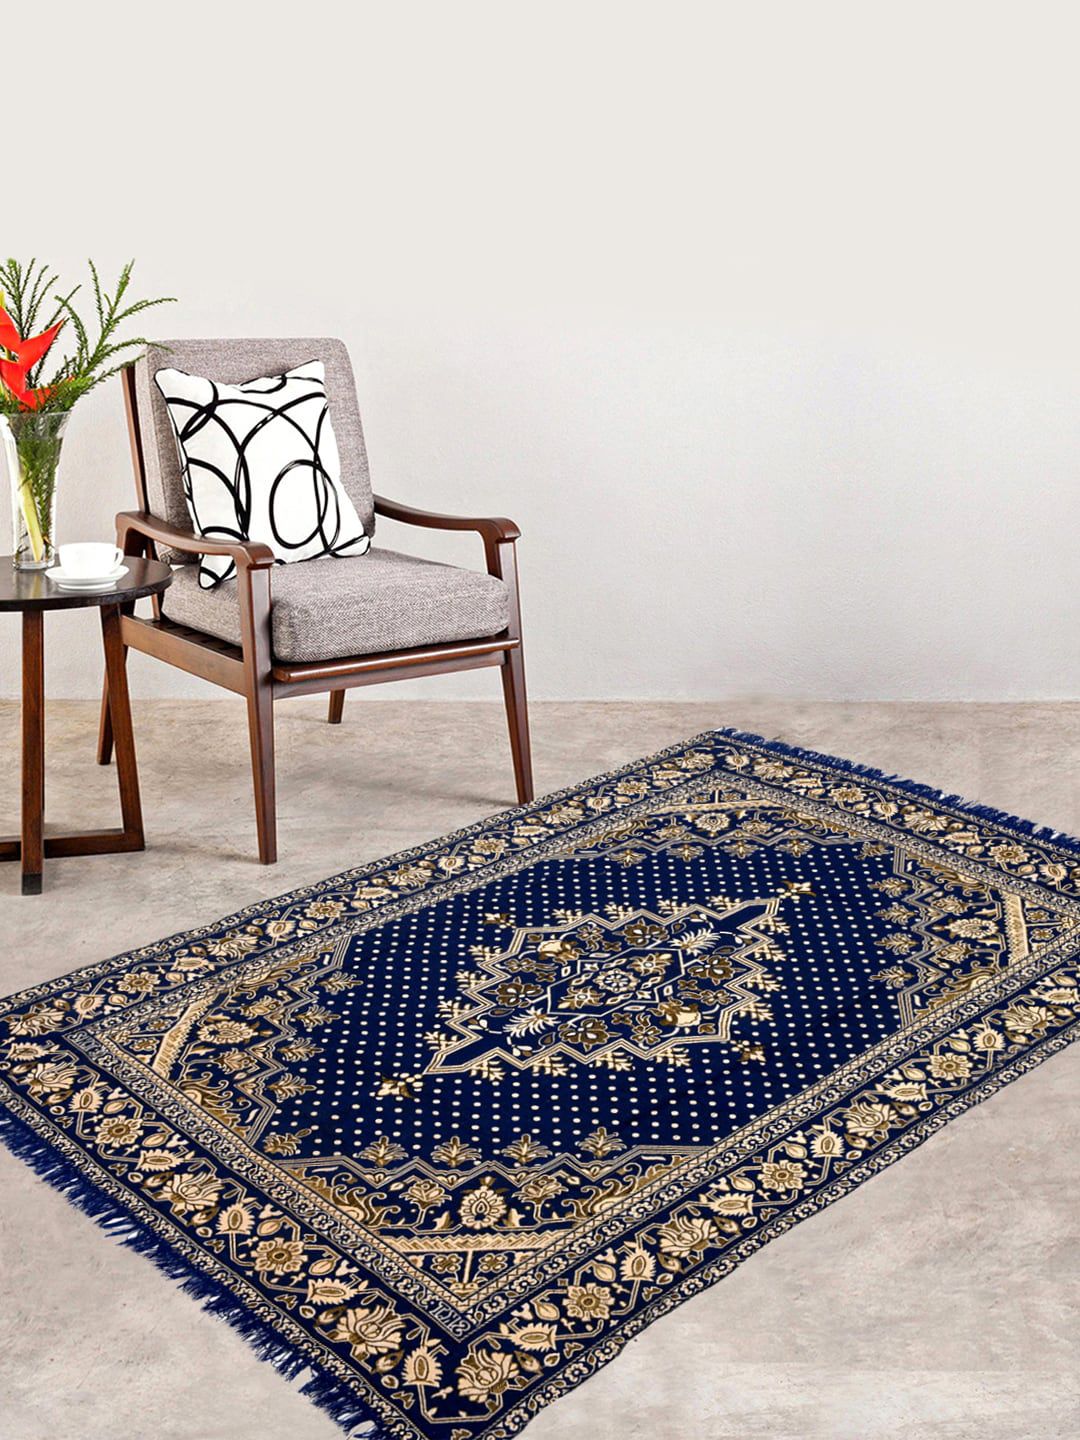 Kuber Industries Blue & Beige Traditional Printed Anti-Skid Carpet Price in India